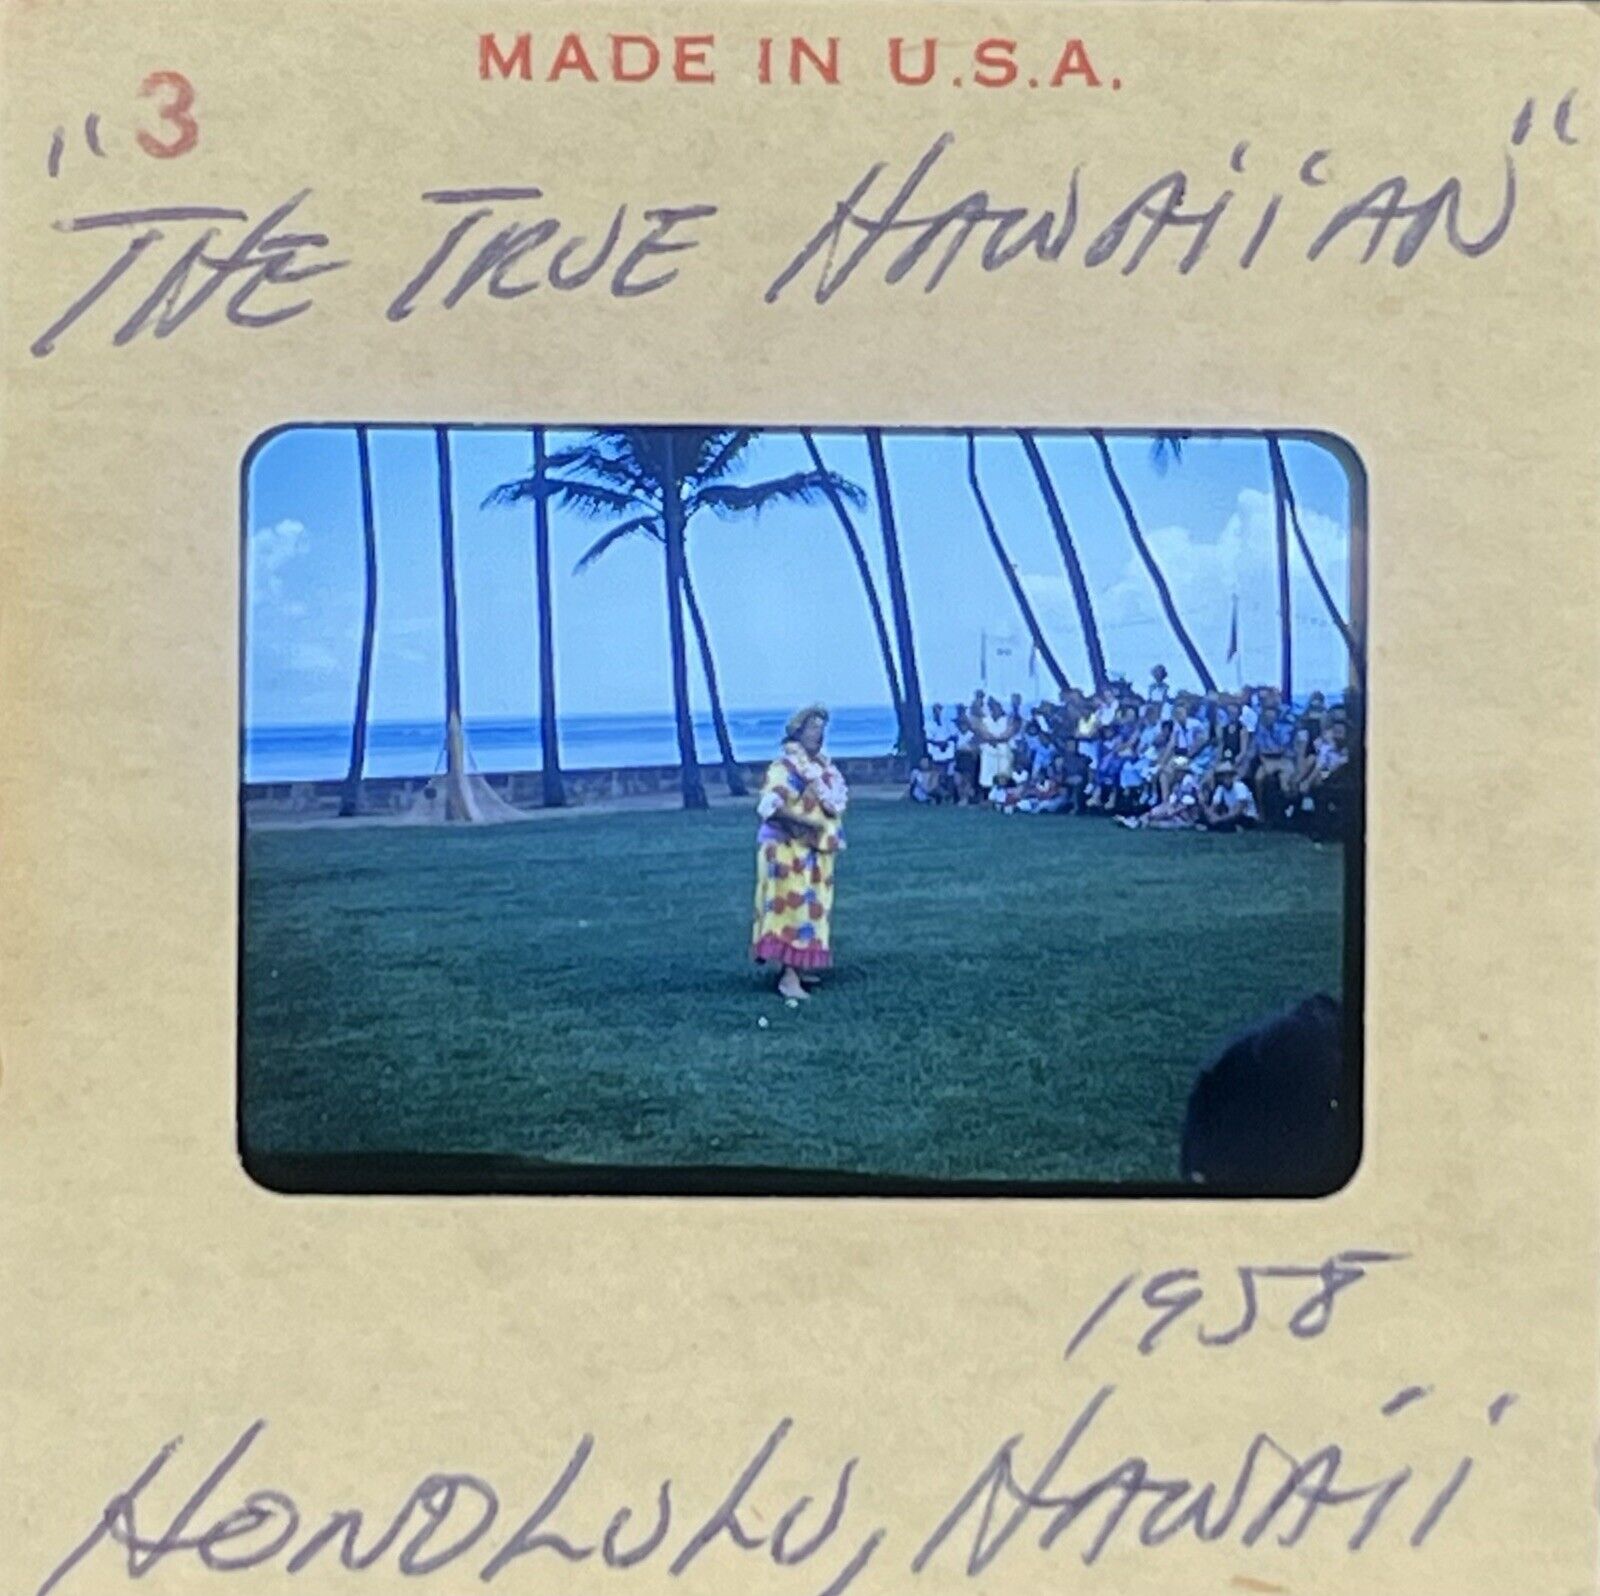 Vintage 35mm Slide 1958 Kodak Hula Show Honolulu Hawaii Red Border Kodachrome